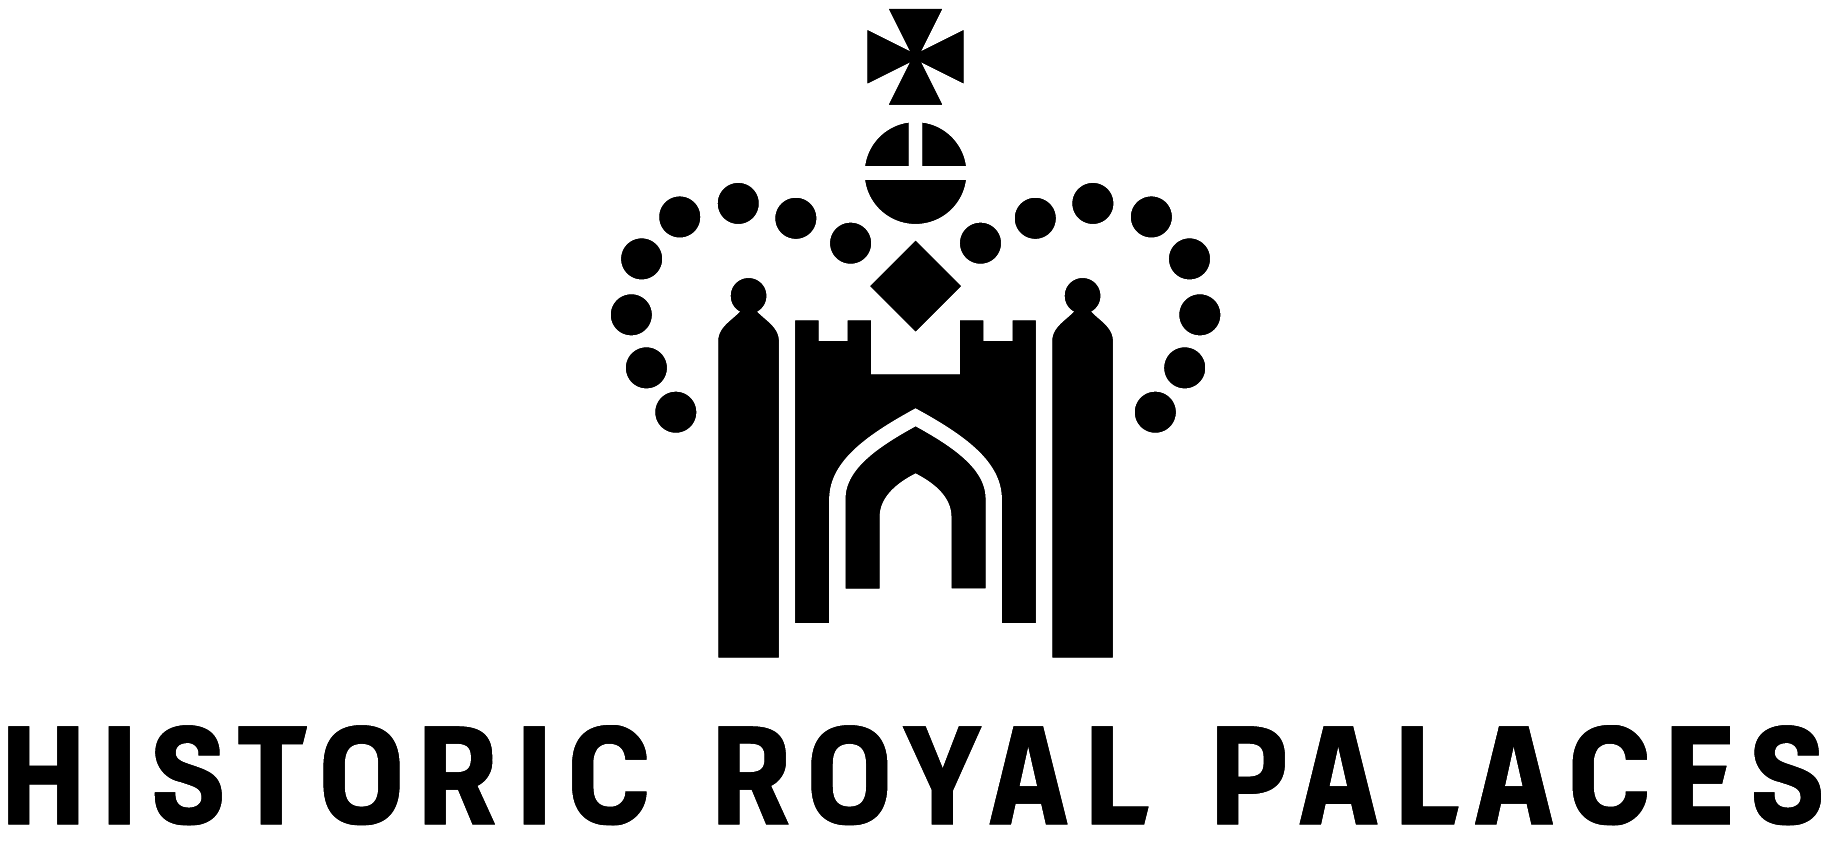 hrp-footer-logo.png